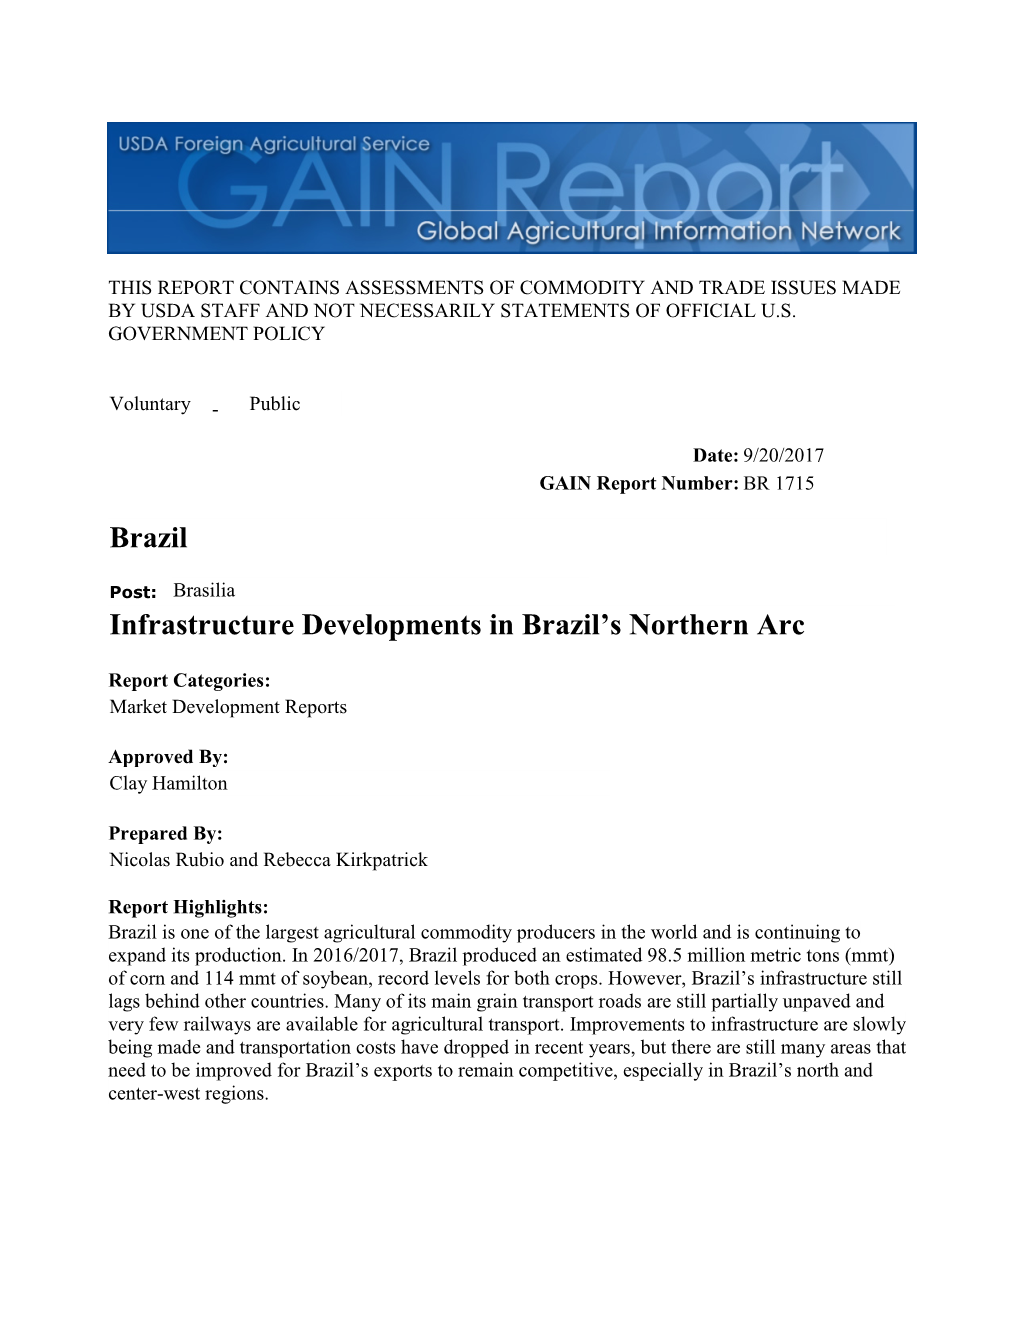 Infrastructure Developments in Brazil's Northern Arc Brazil